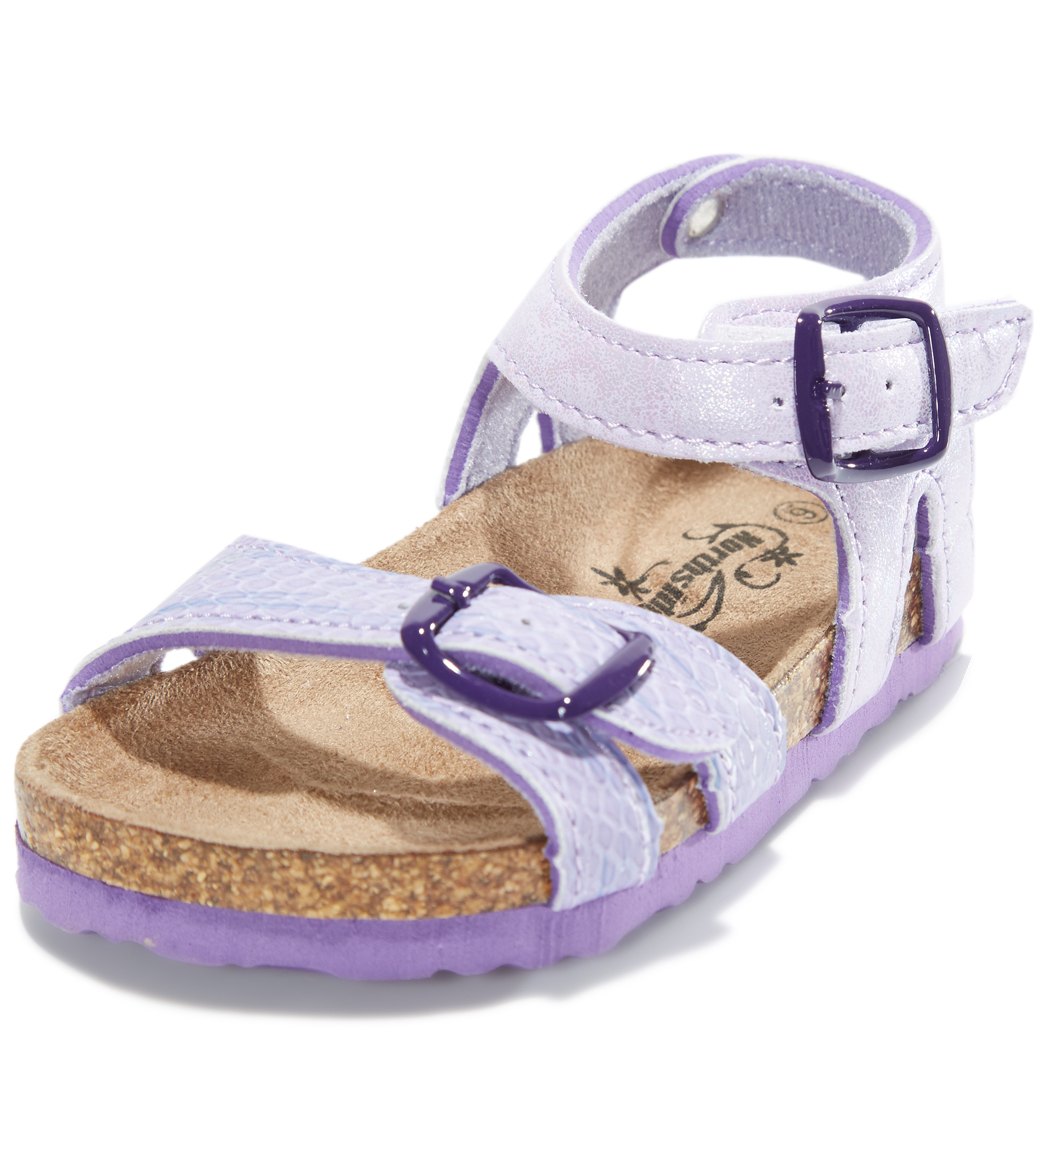 Northside Girls' Maisie Sandals Toddler/Little/Big Kid - Purple/Lilac 4 Big - Swimoutlet.com